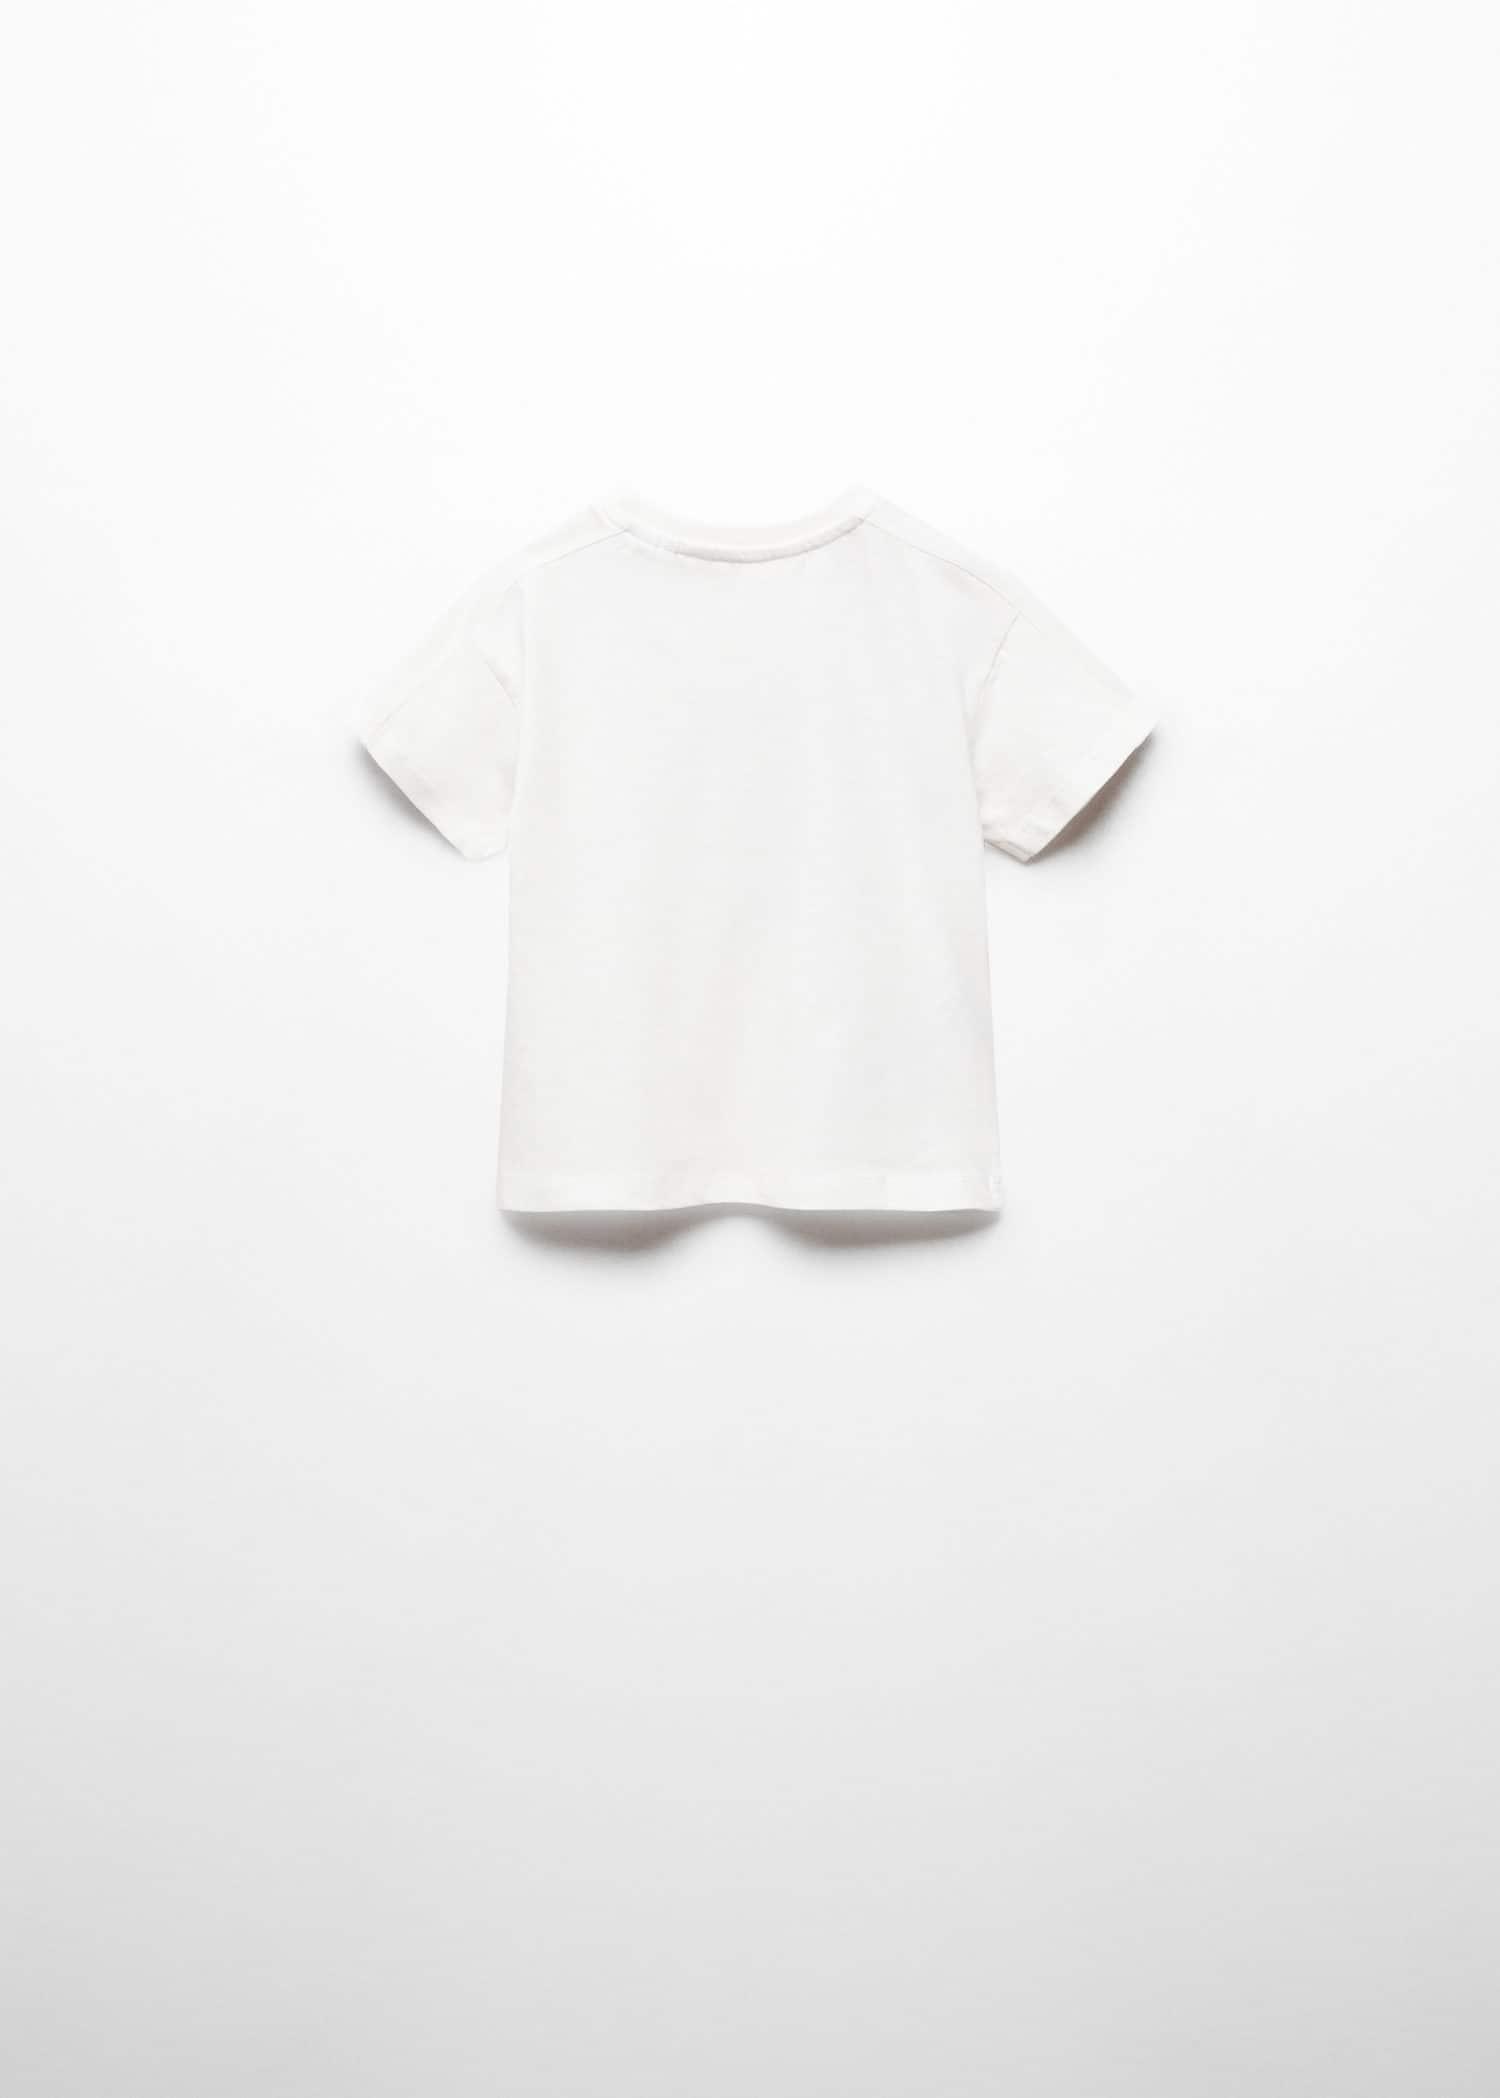 Mango - White Cotton Printed T-Shirt, Kids Boys